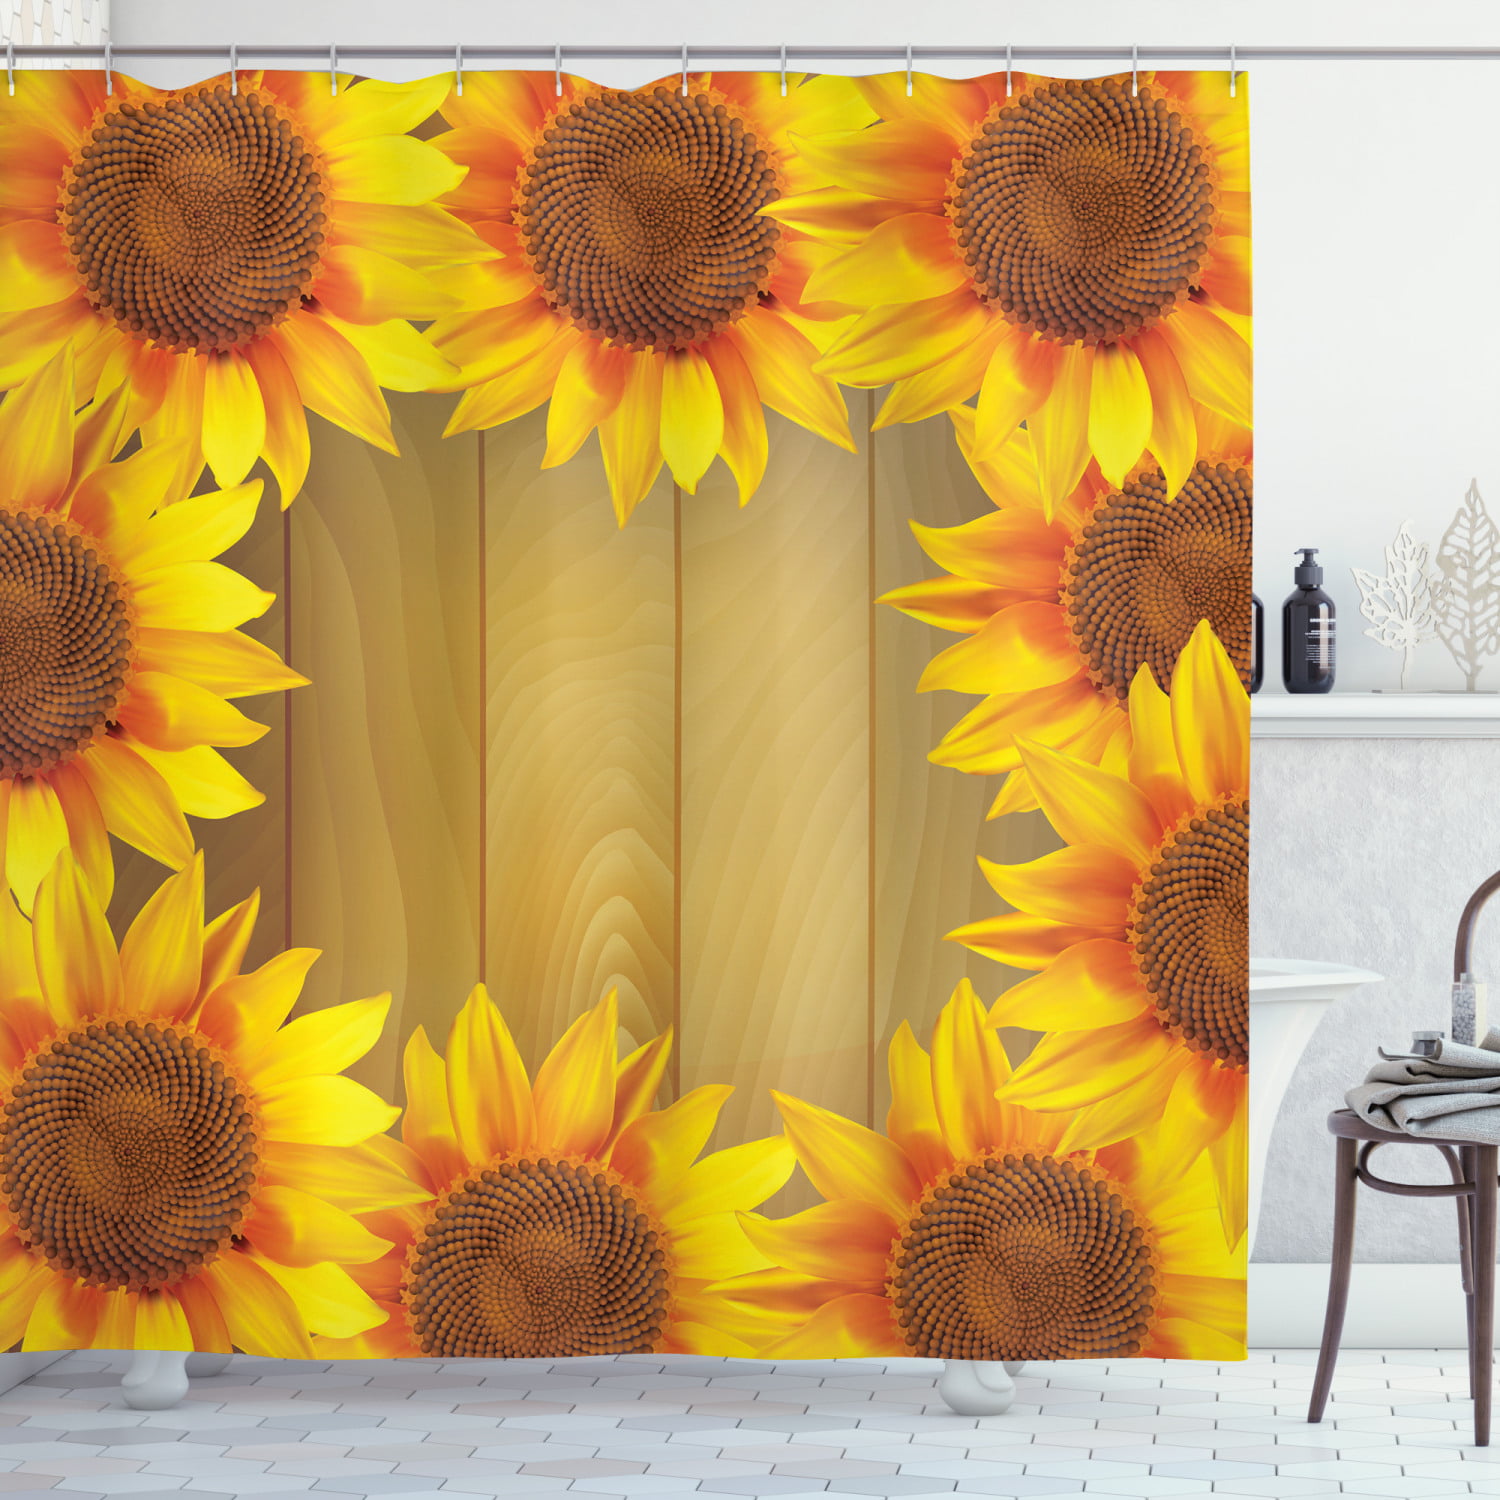 Blooming Sunflower Wood Board Fabric Shower Curtain Liner 12 Hooks Bathroom Set 